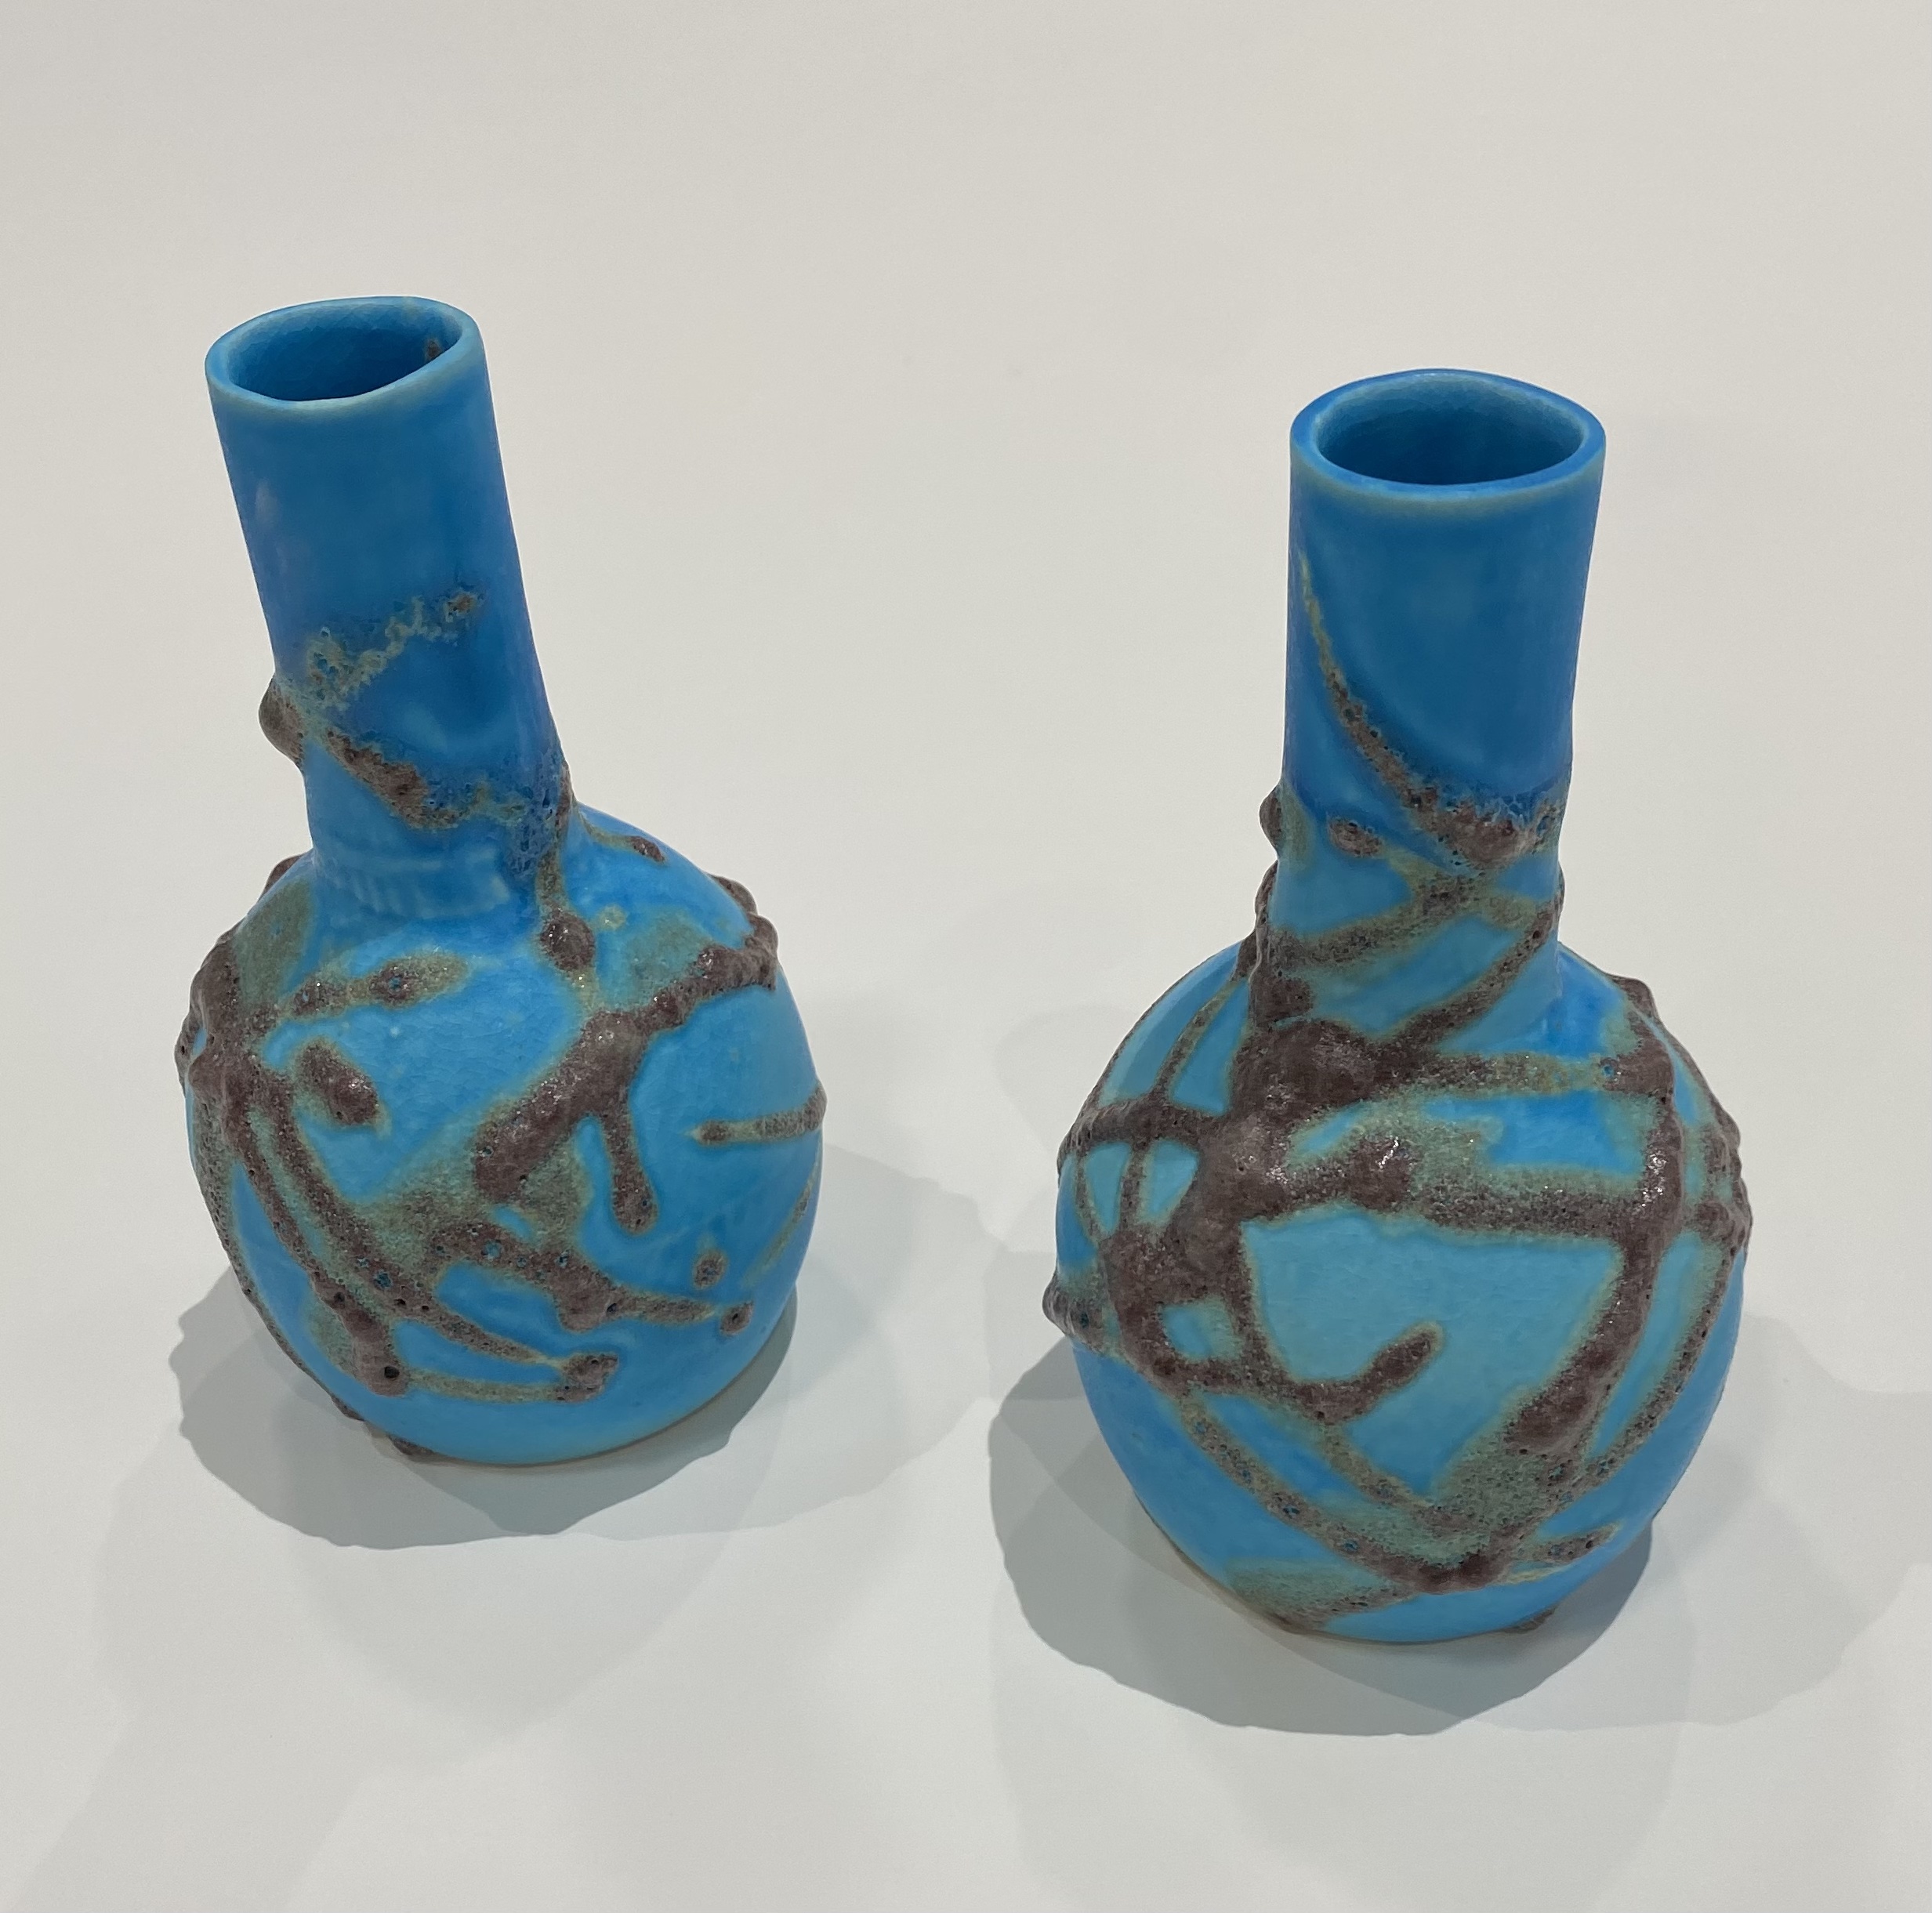 Turquoise Bud Vase
Ceramic
5.5" tall
$25. each